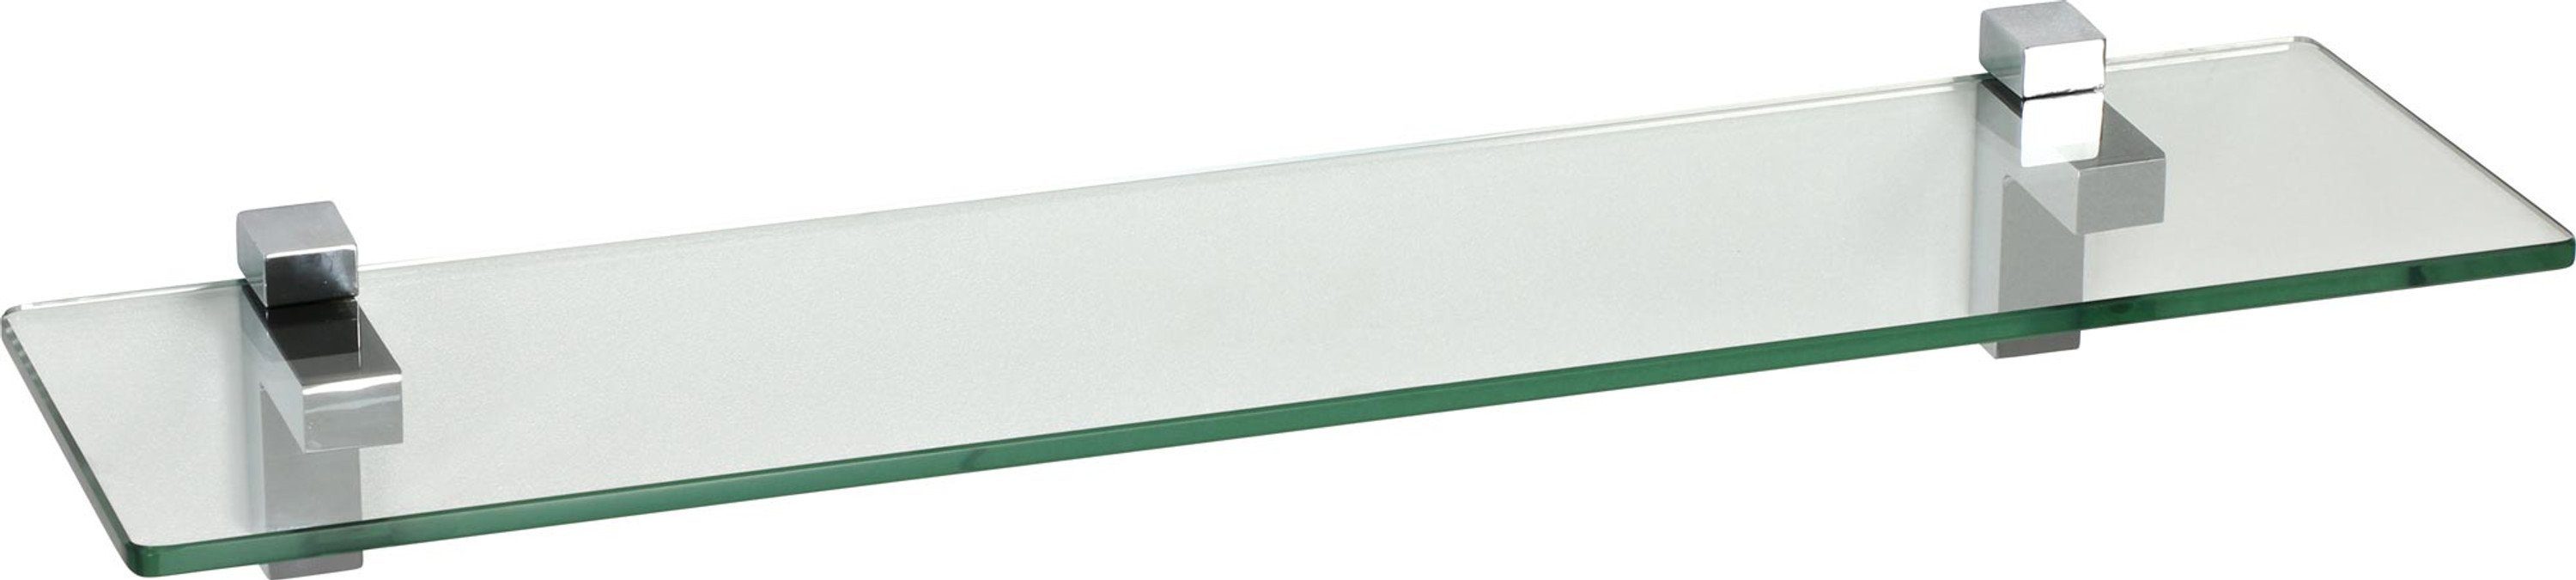 ib style Wandregal Glasregal 8mm eckig klar 40 x 15 cm + Clip Quadro Silbermatt, ESG-Sicherheitsglas